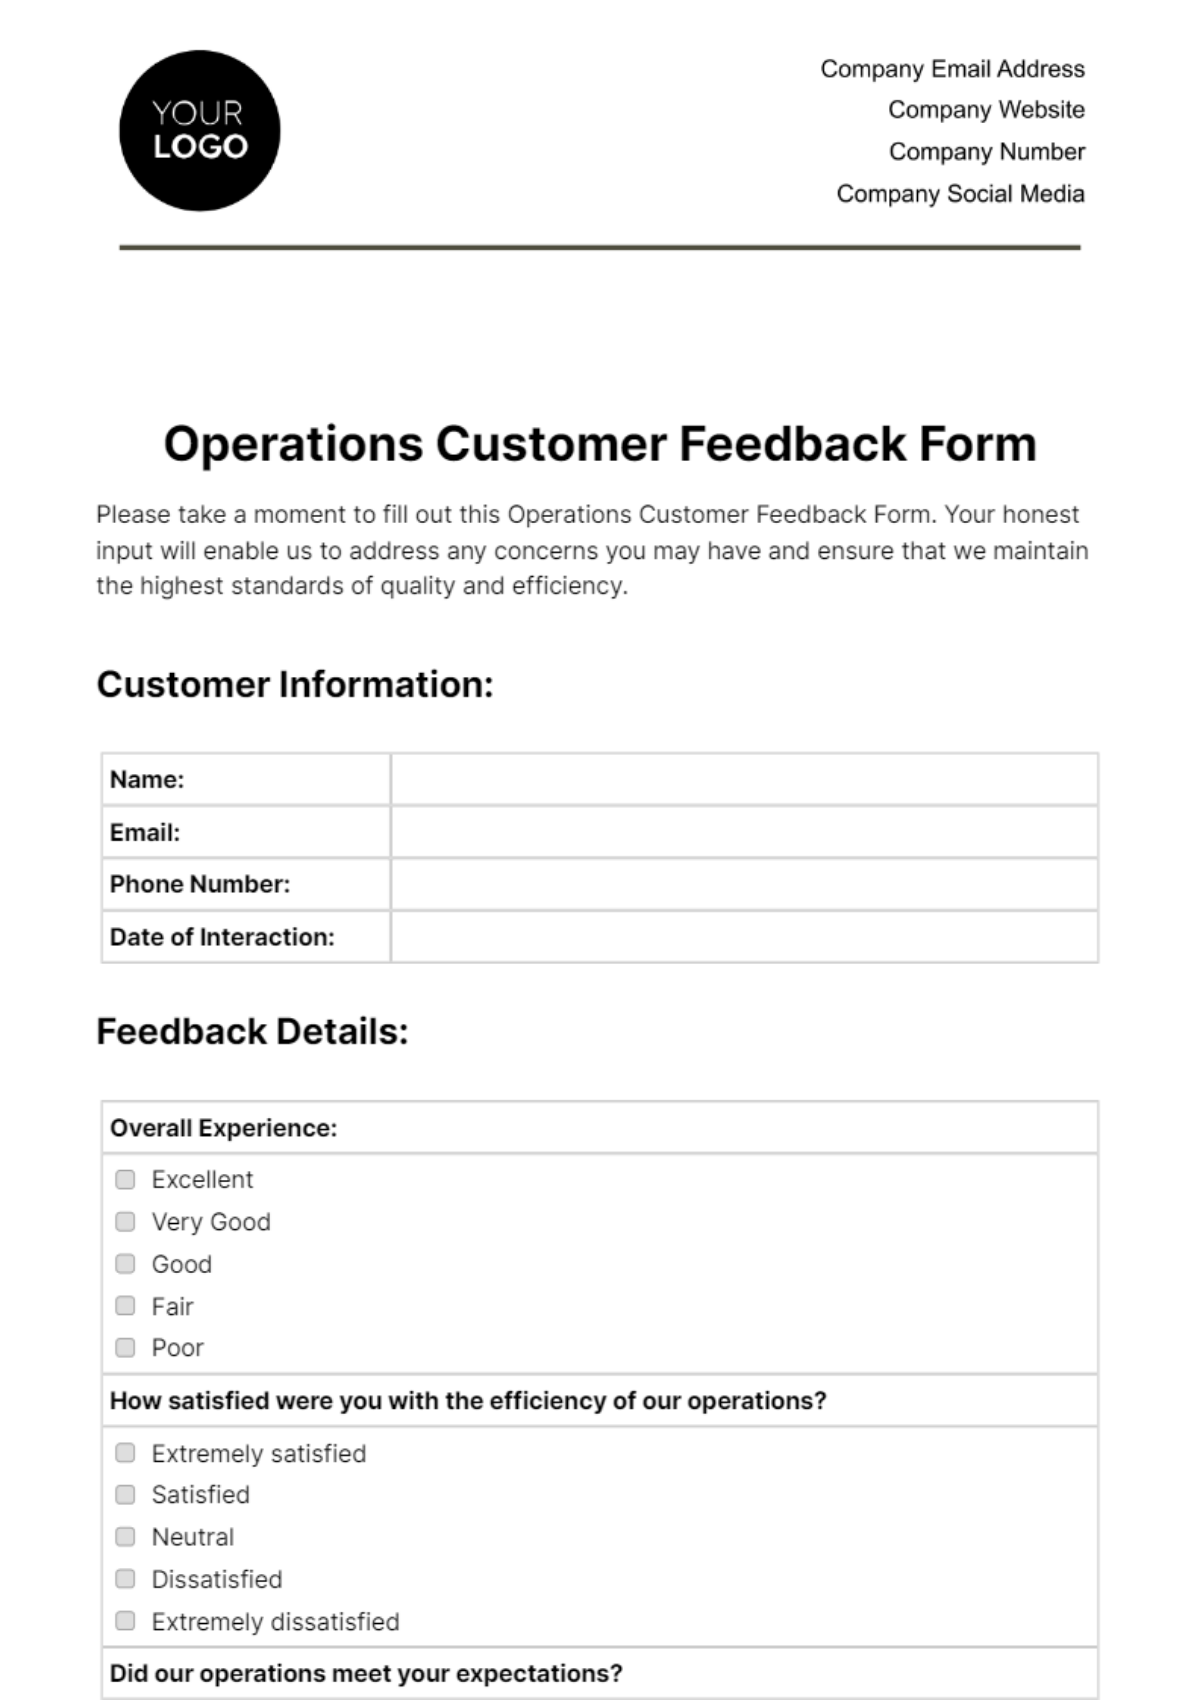 Operations Customer Feedback Form Template